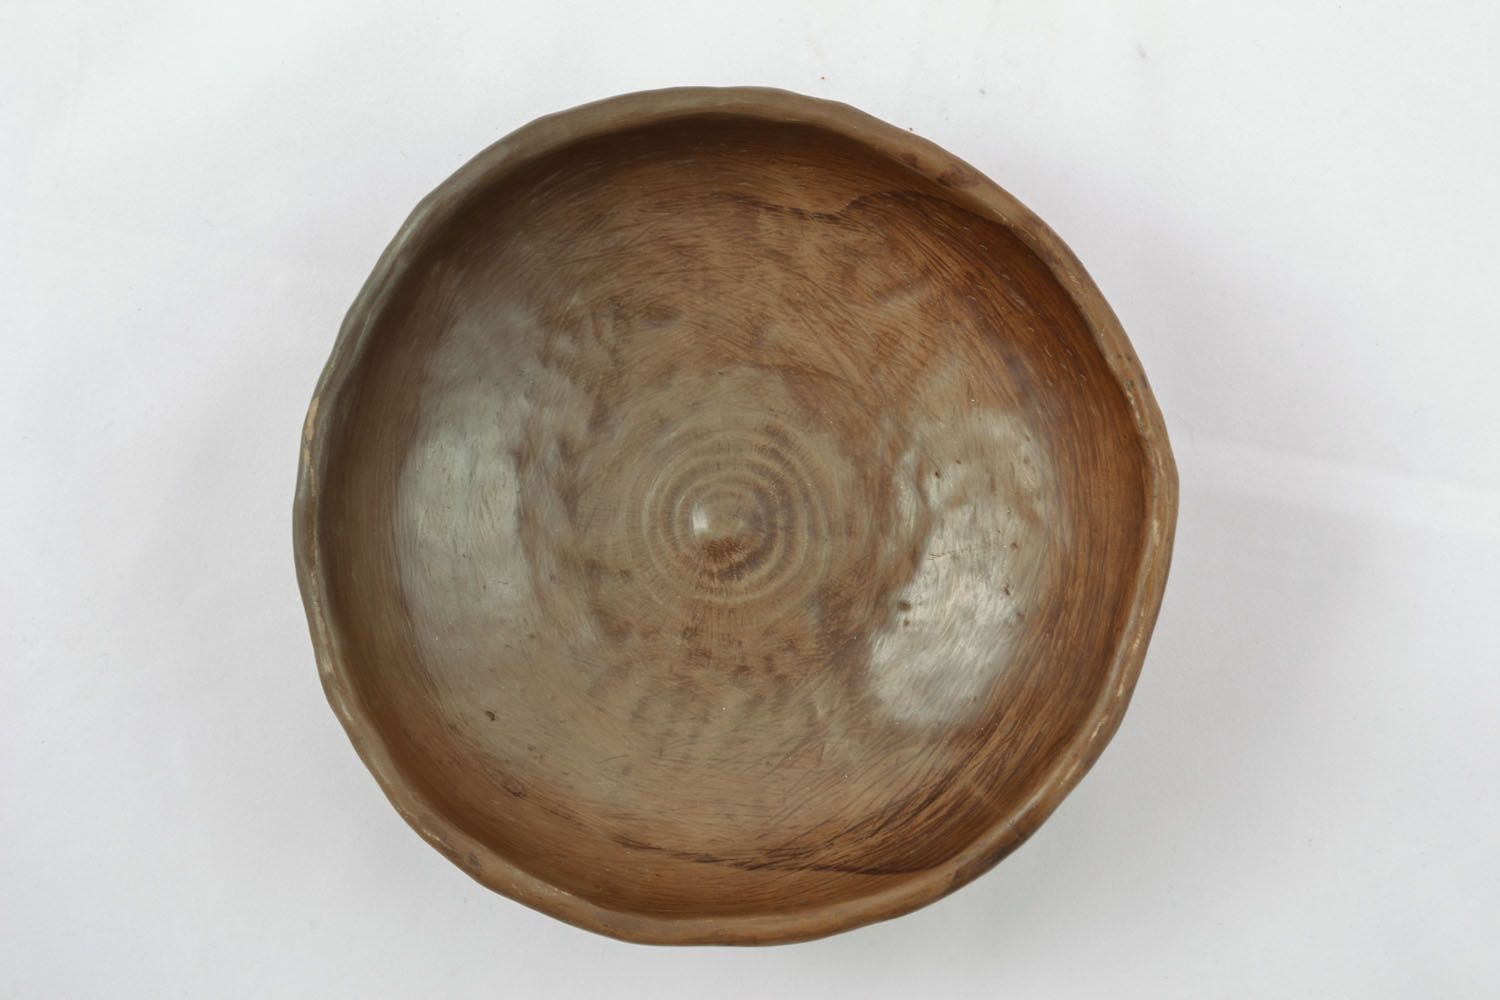 Homemade ceramic plate photo 1